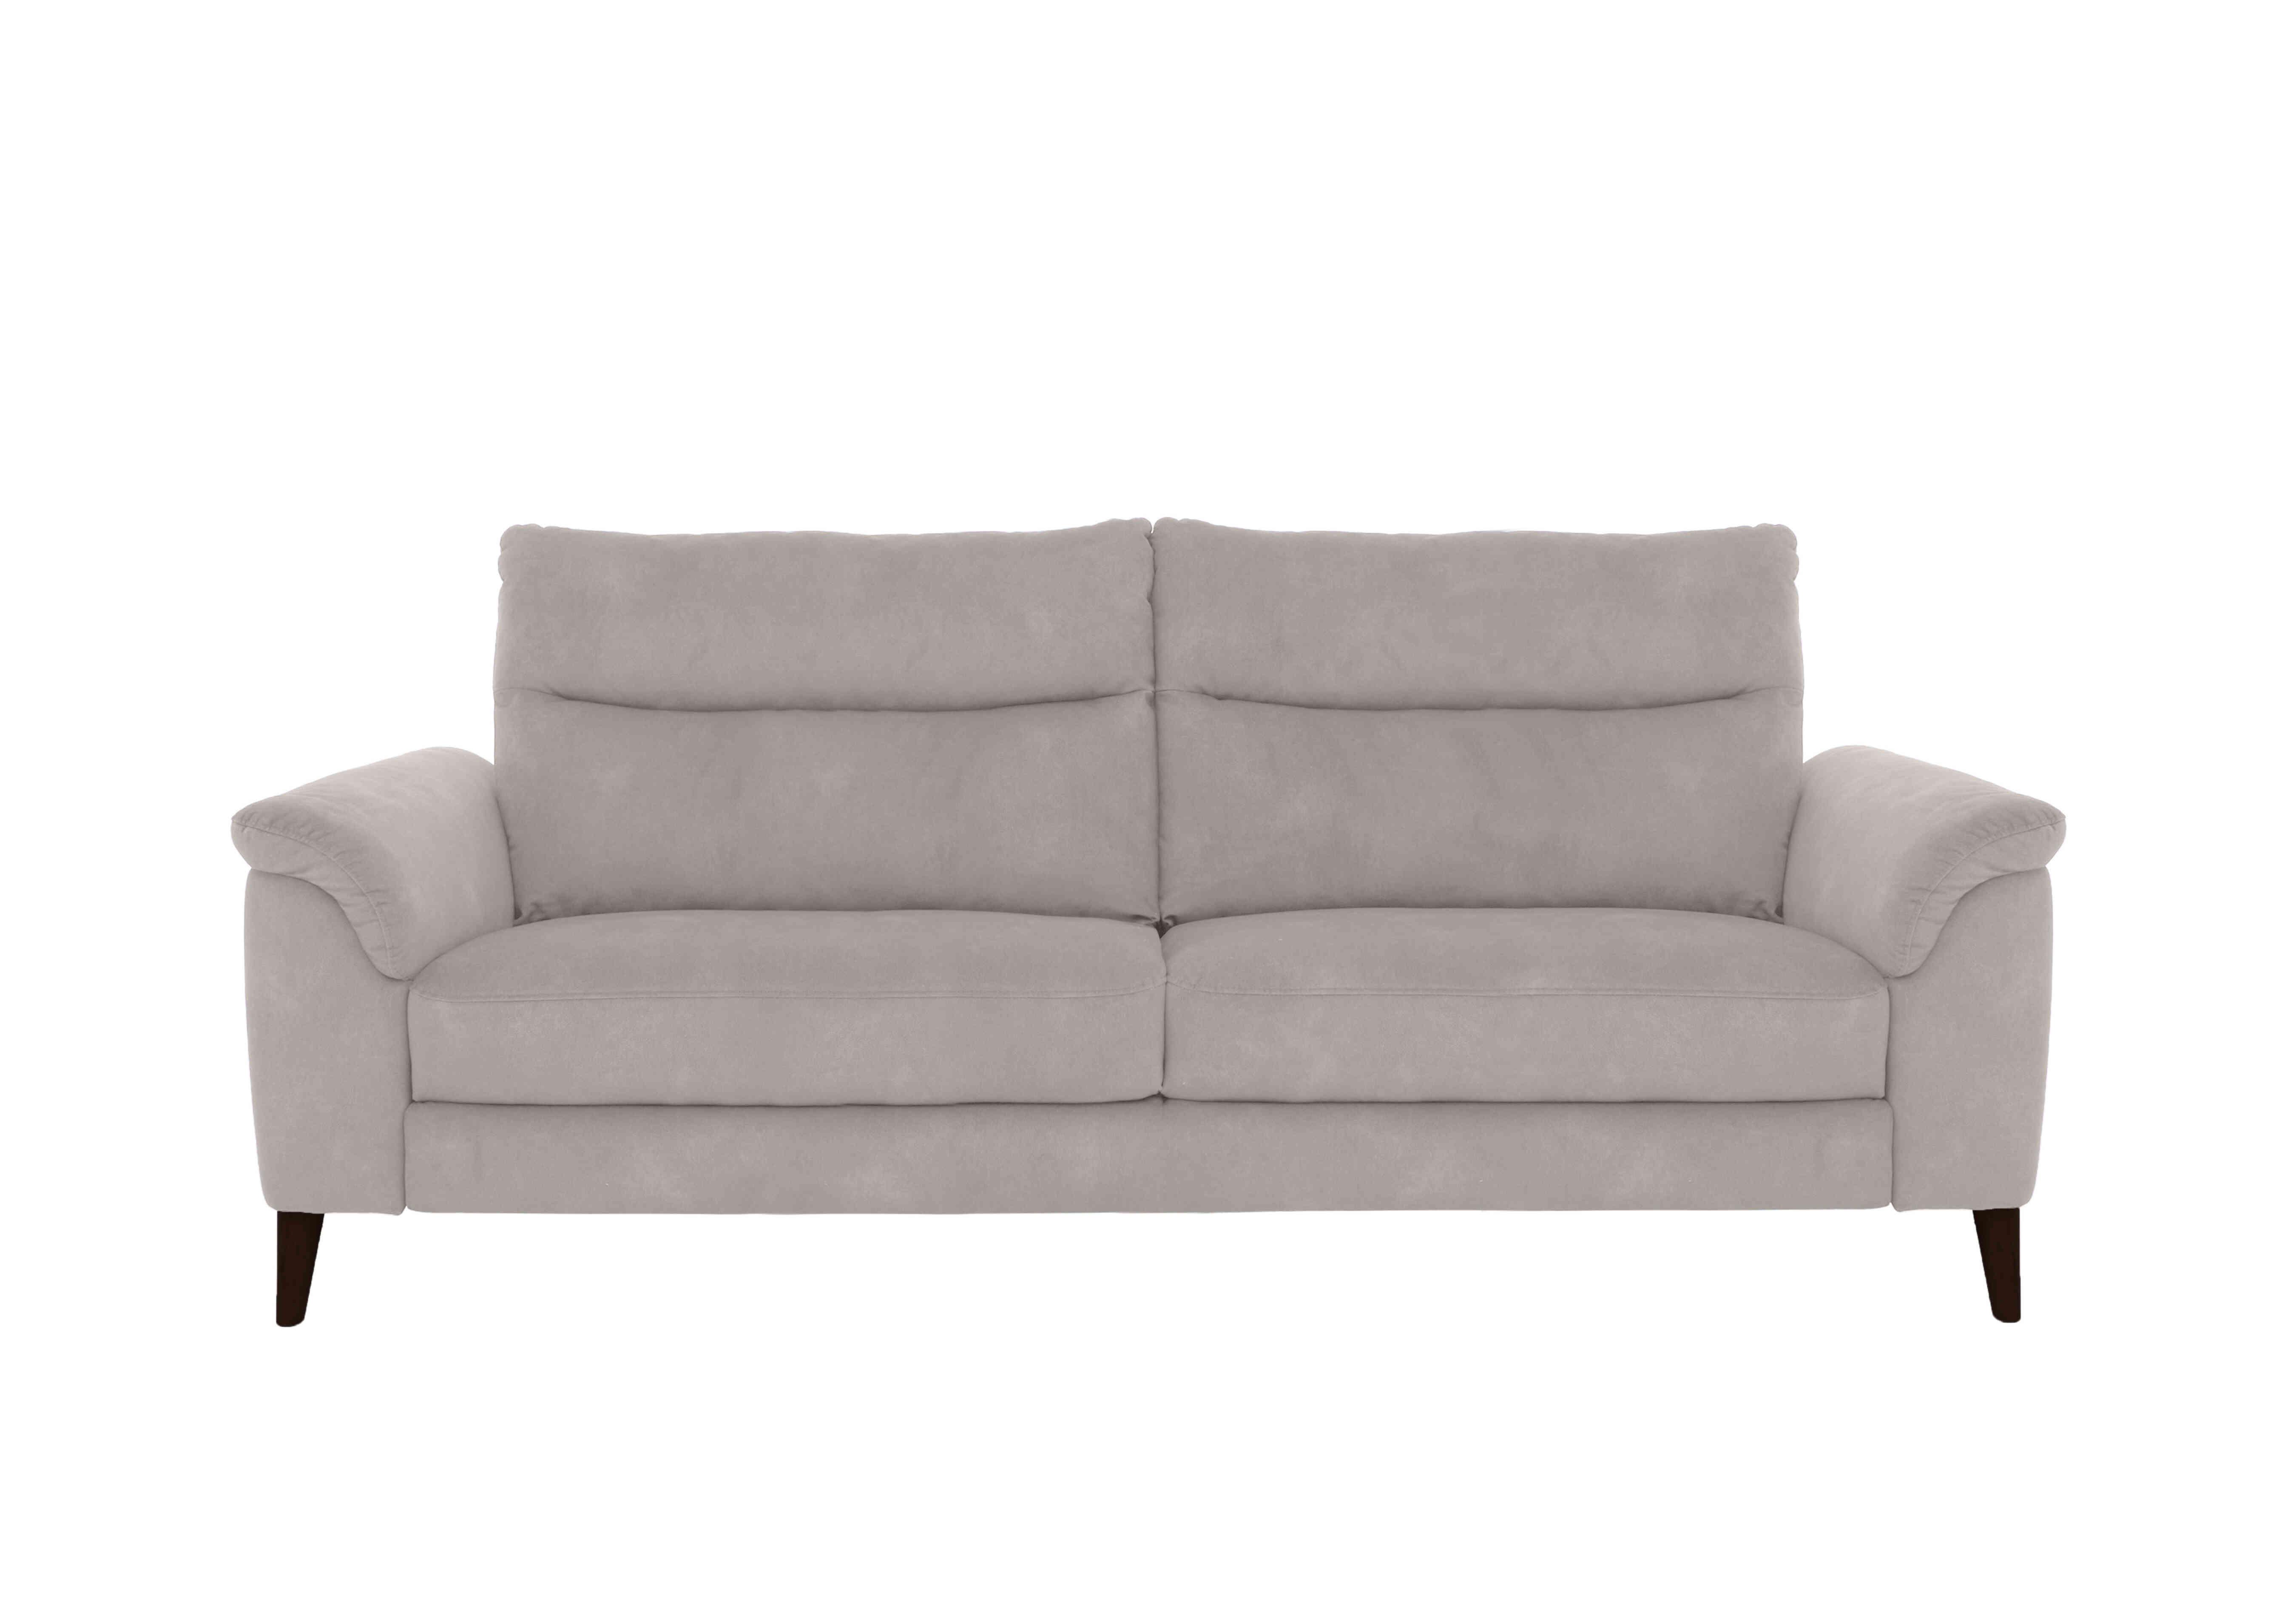 Morgan 3 Seater Fabric Sofa in Stone Dexter 02 43502 on Furniture Village